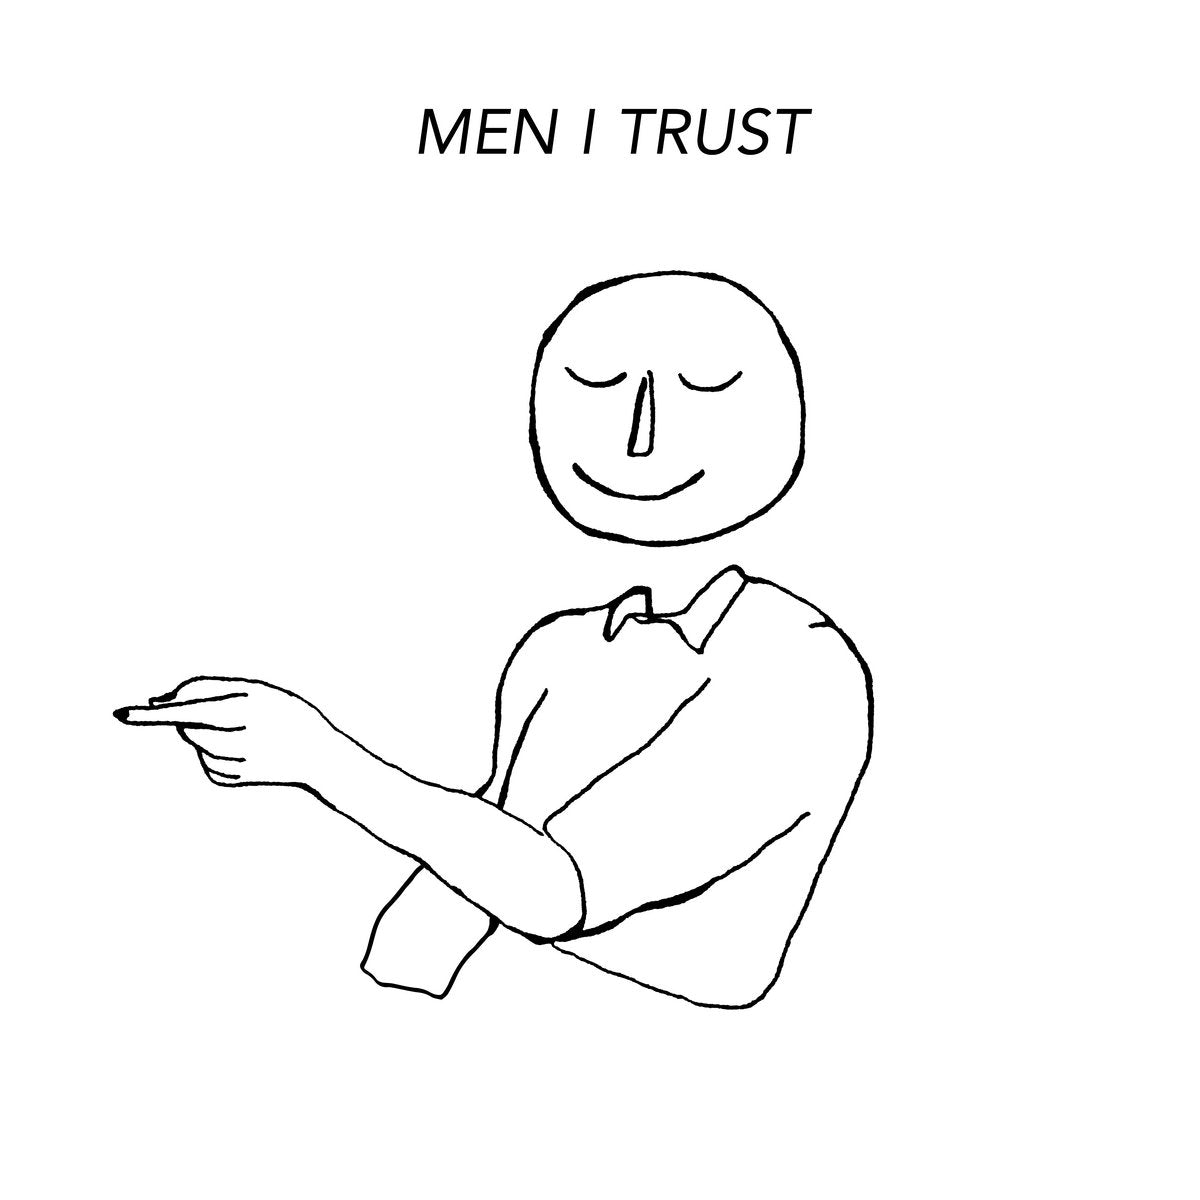 Men I Trust / Men I Trust (2017)